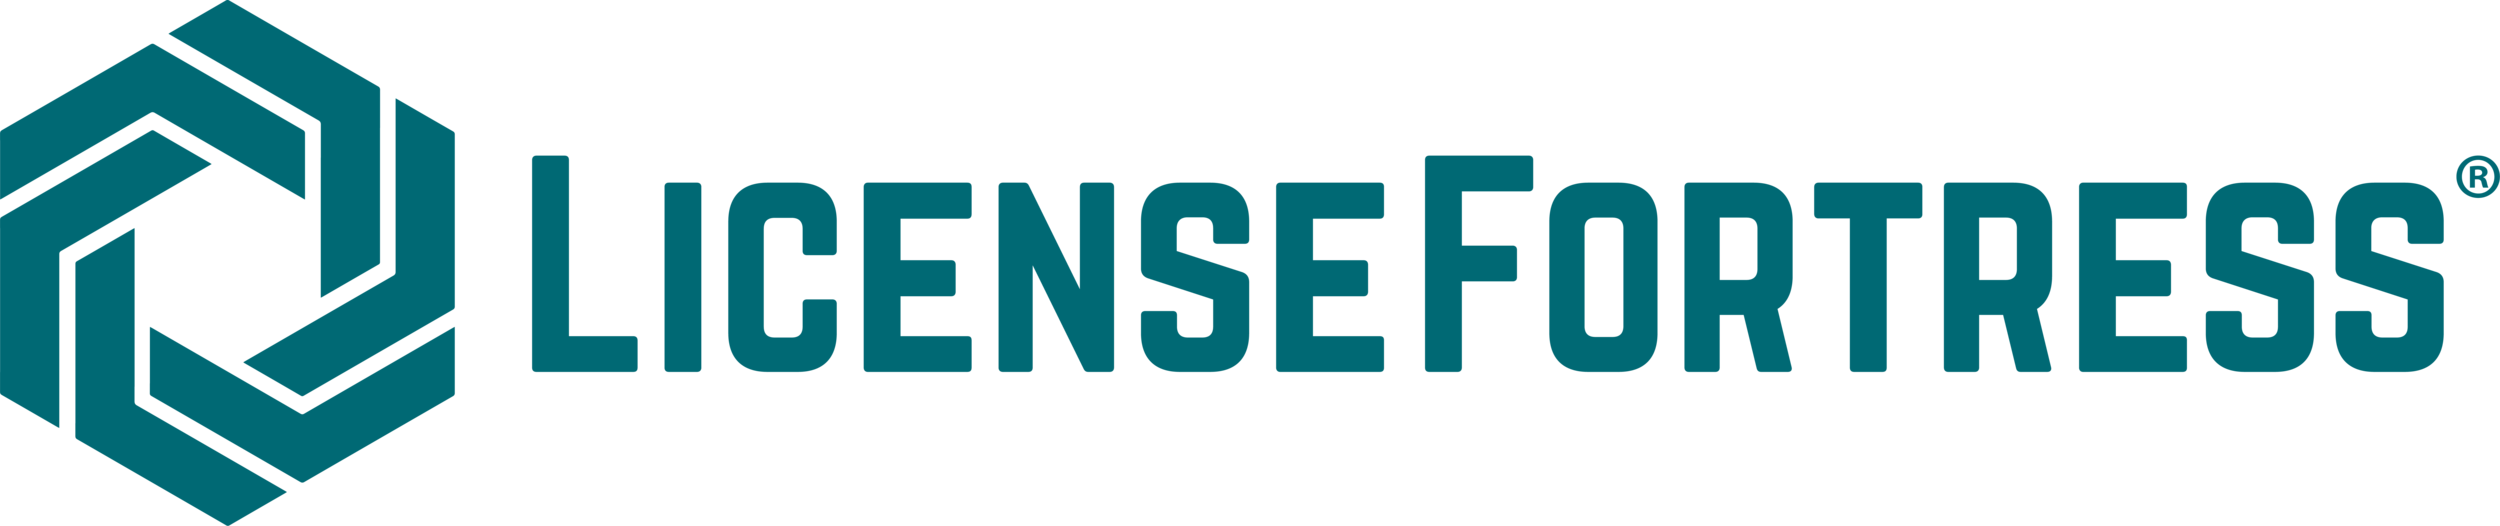 licensefortress logo